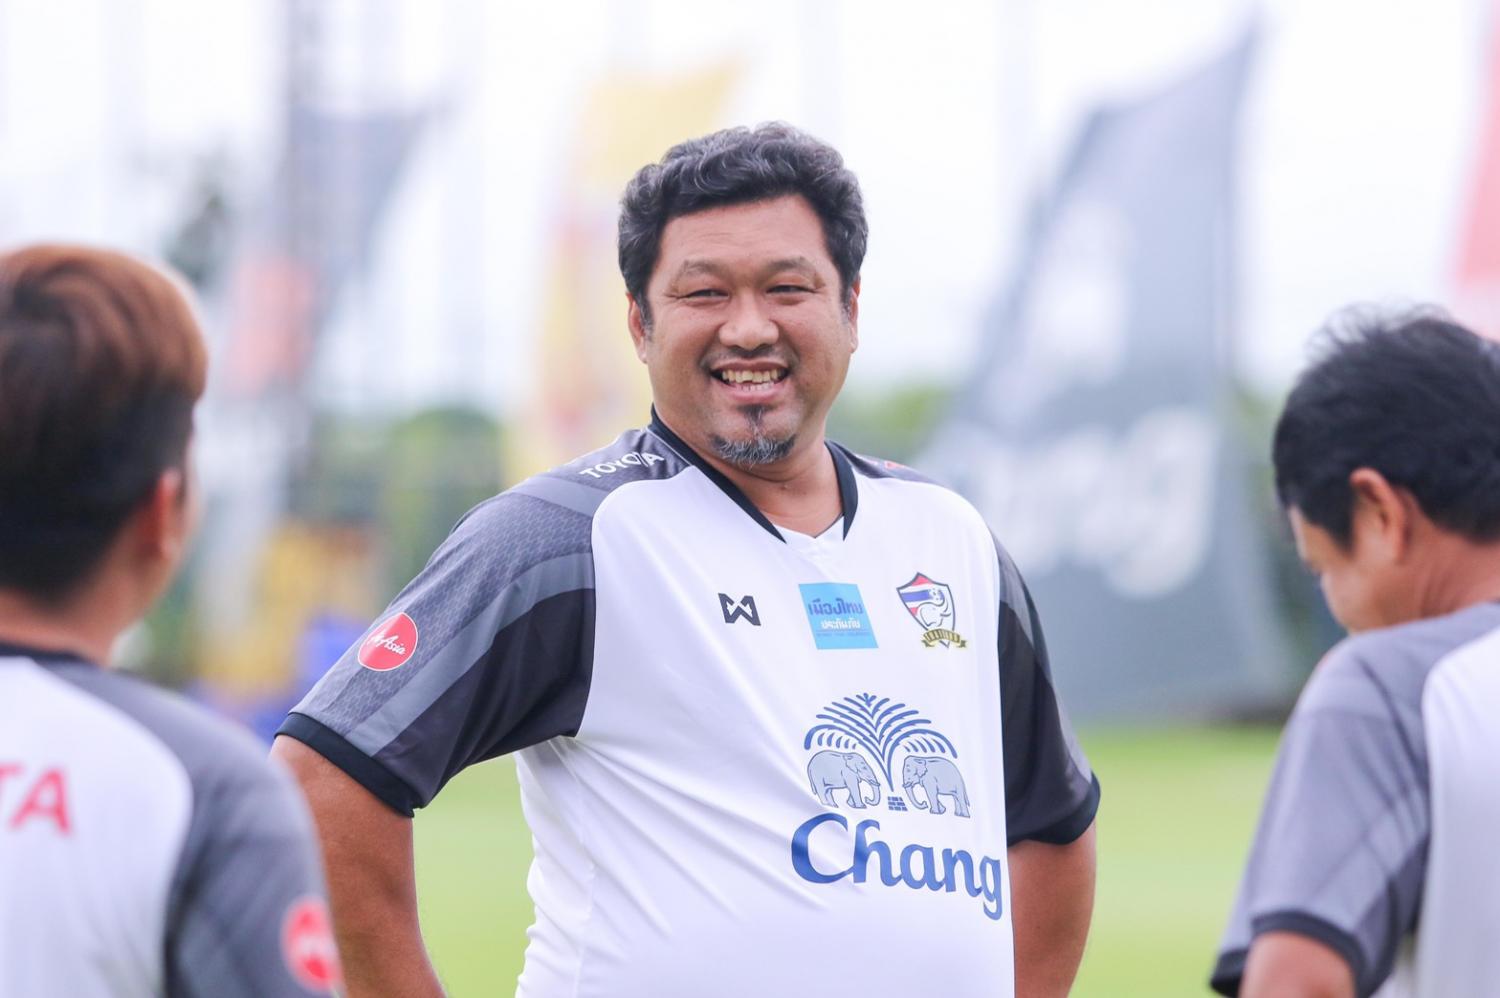 Worrawoot named as coach of Thai U23 team